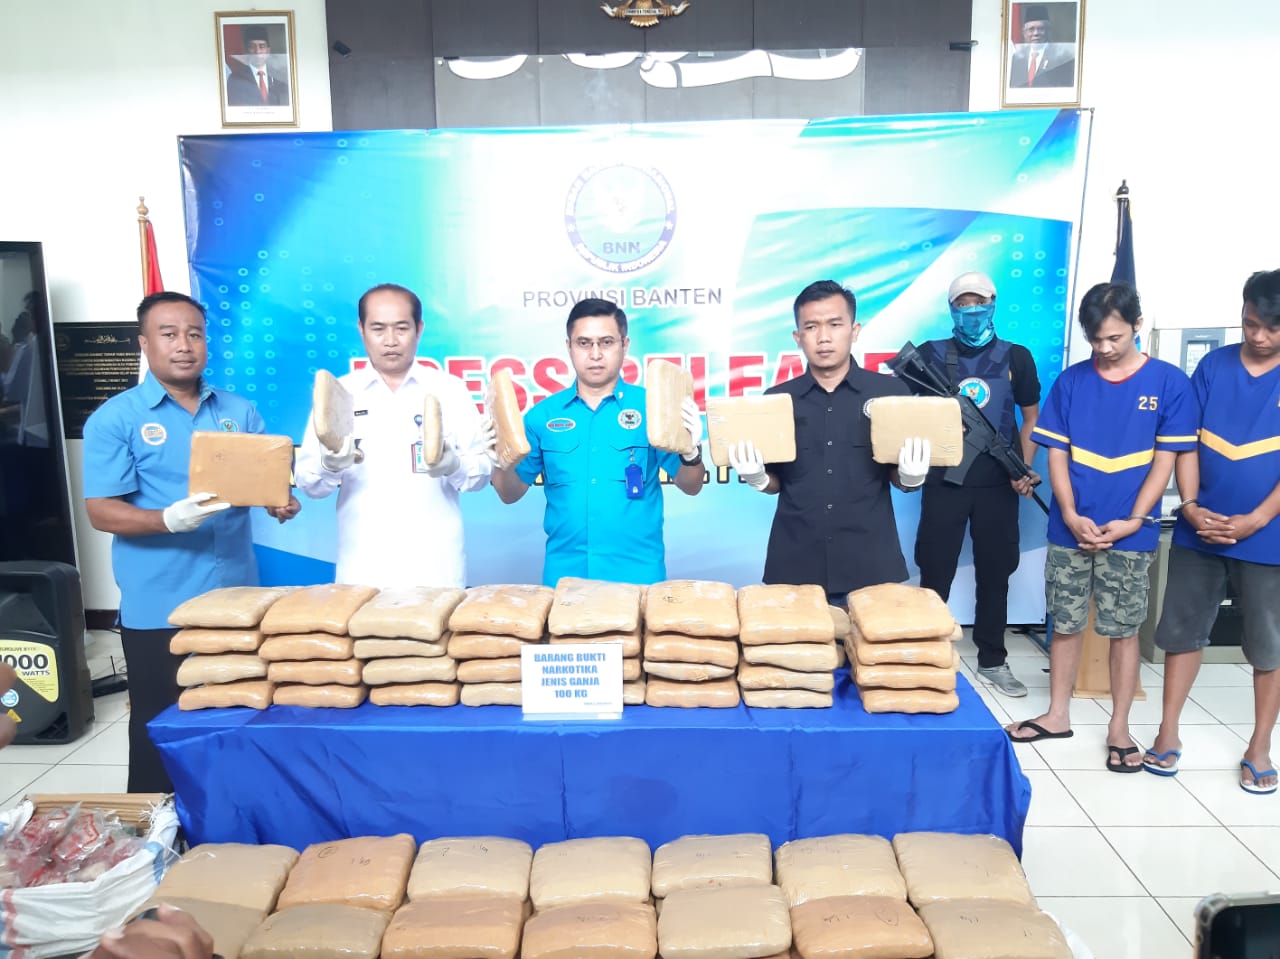 Bravo! BNNP Banten Gagalkan Pengiriman 100 Kg Ganja